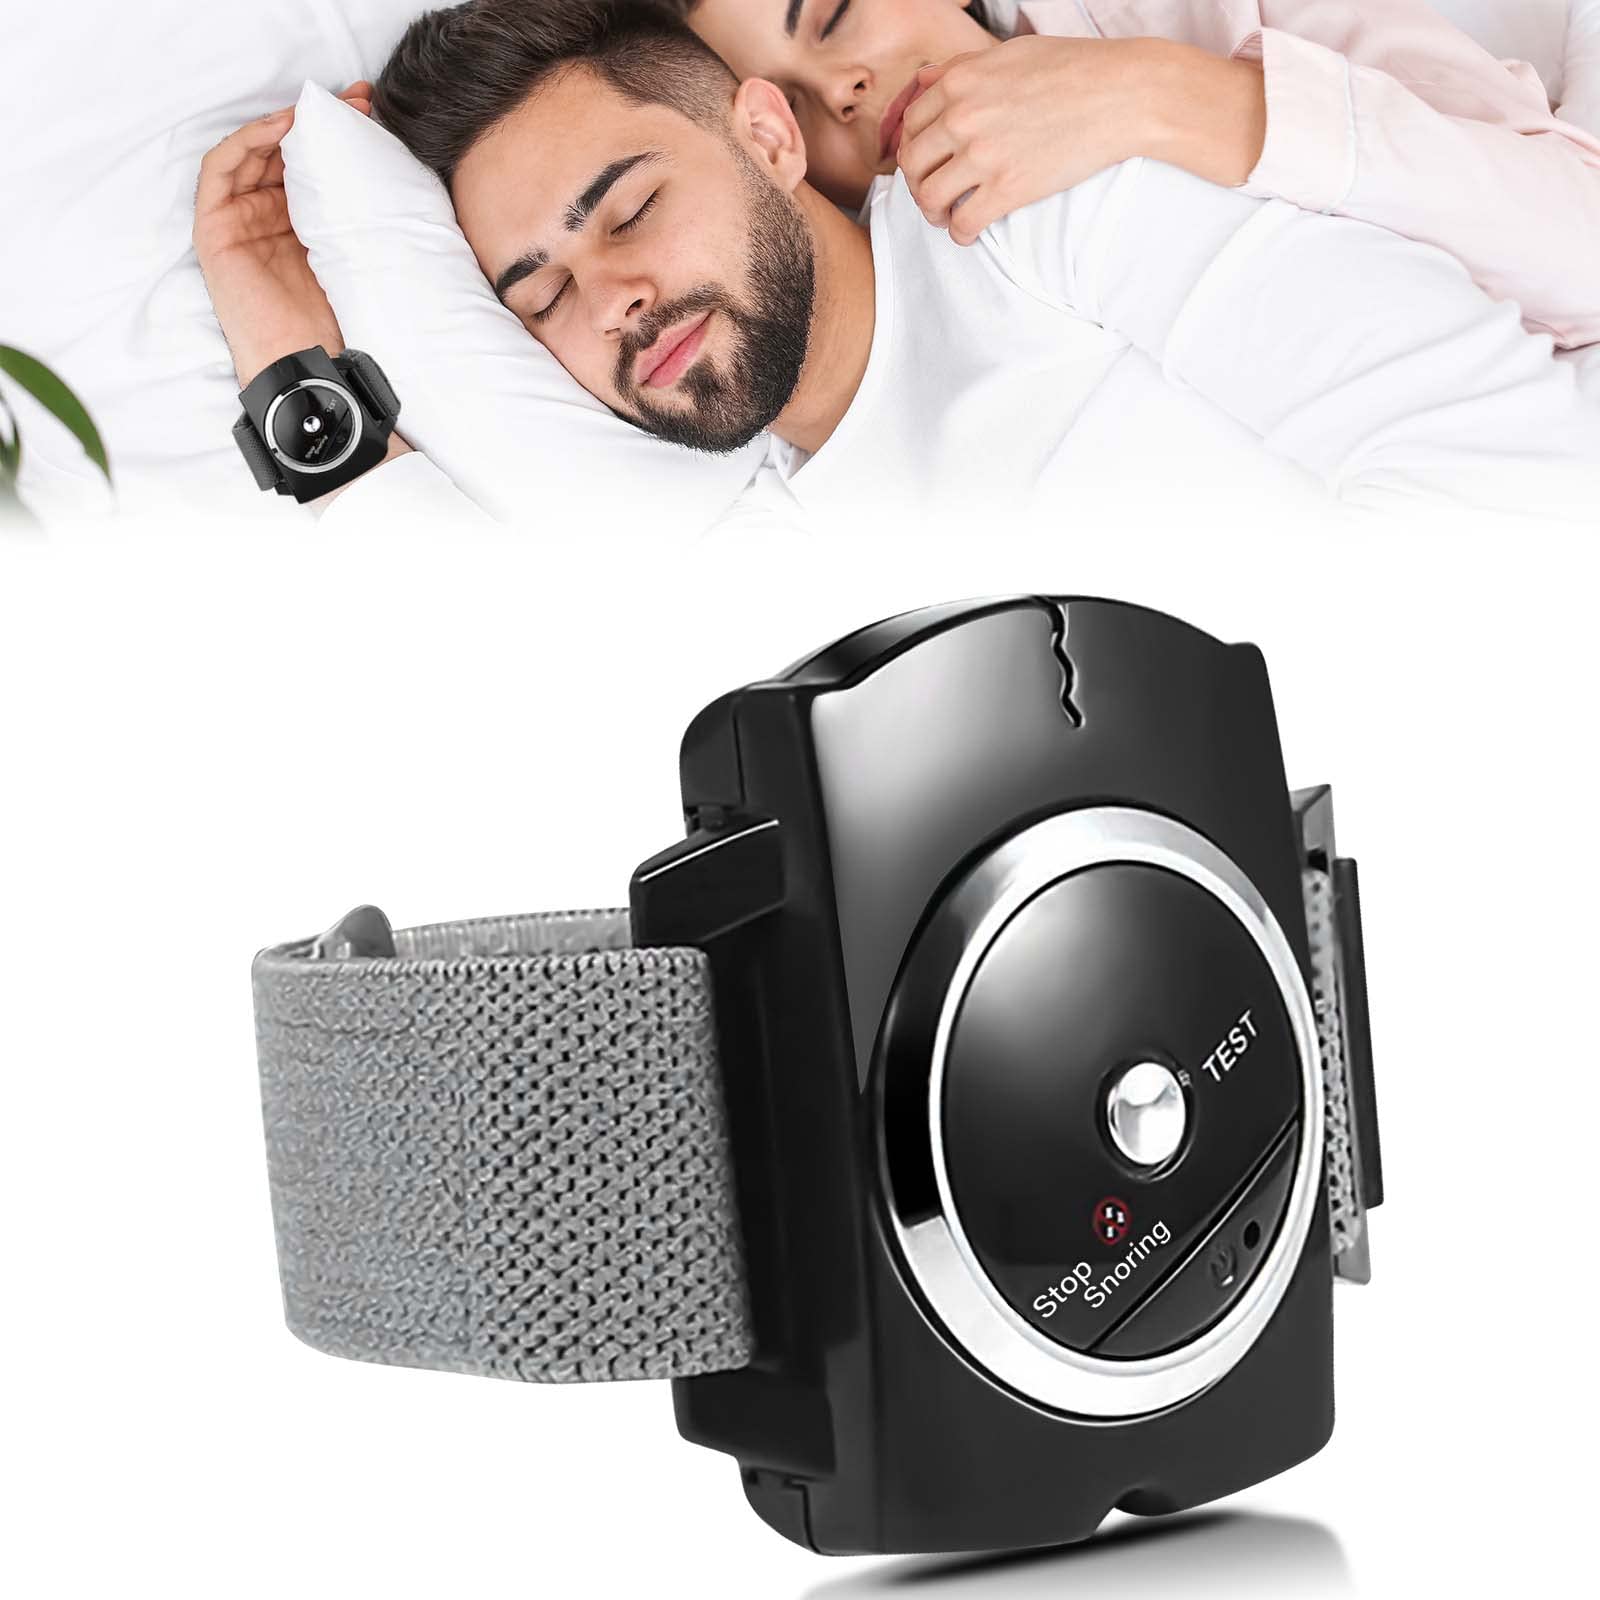 Anti Snoring Bracelet Intelligent Anti-Snoring Wristband Bracelet with  Smart Sensor Adjustable Size & Strength Anti Snoring Device for Good Sleep  Qualtiy USB Charging (black) : Amazon.co.uk: Health & Personal Care